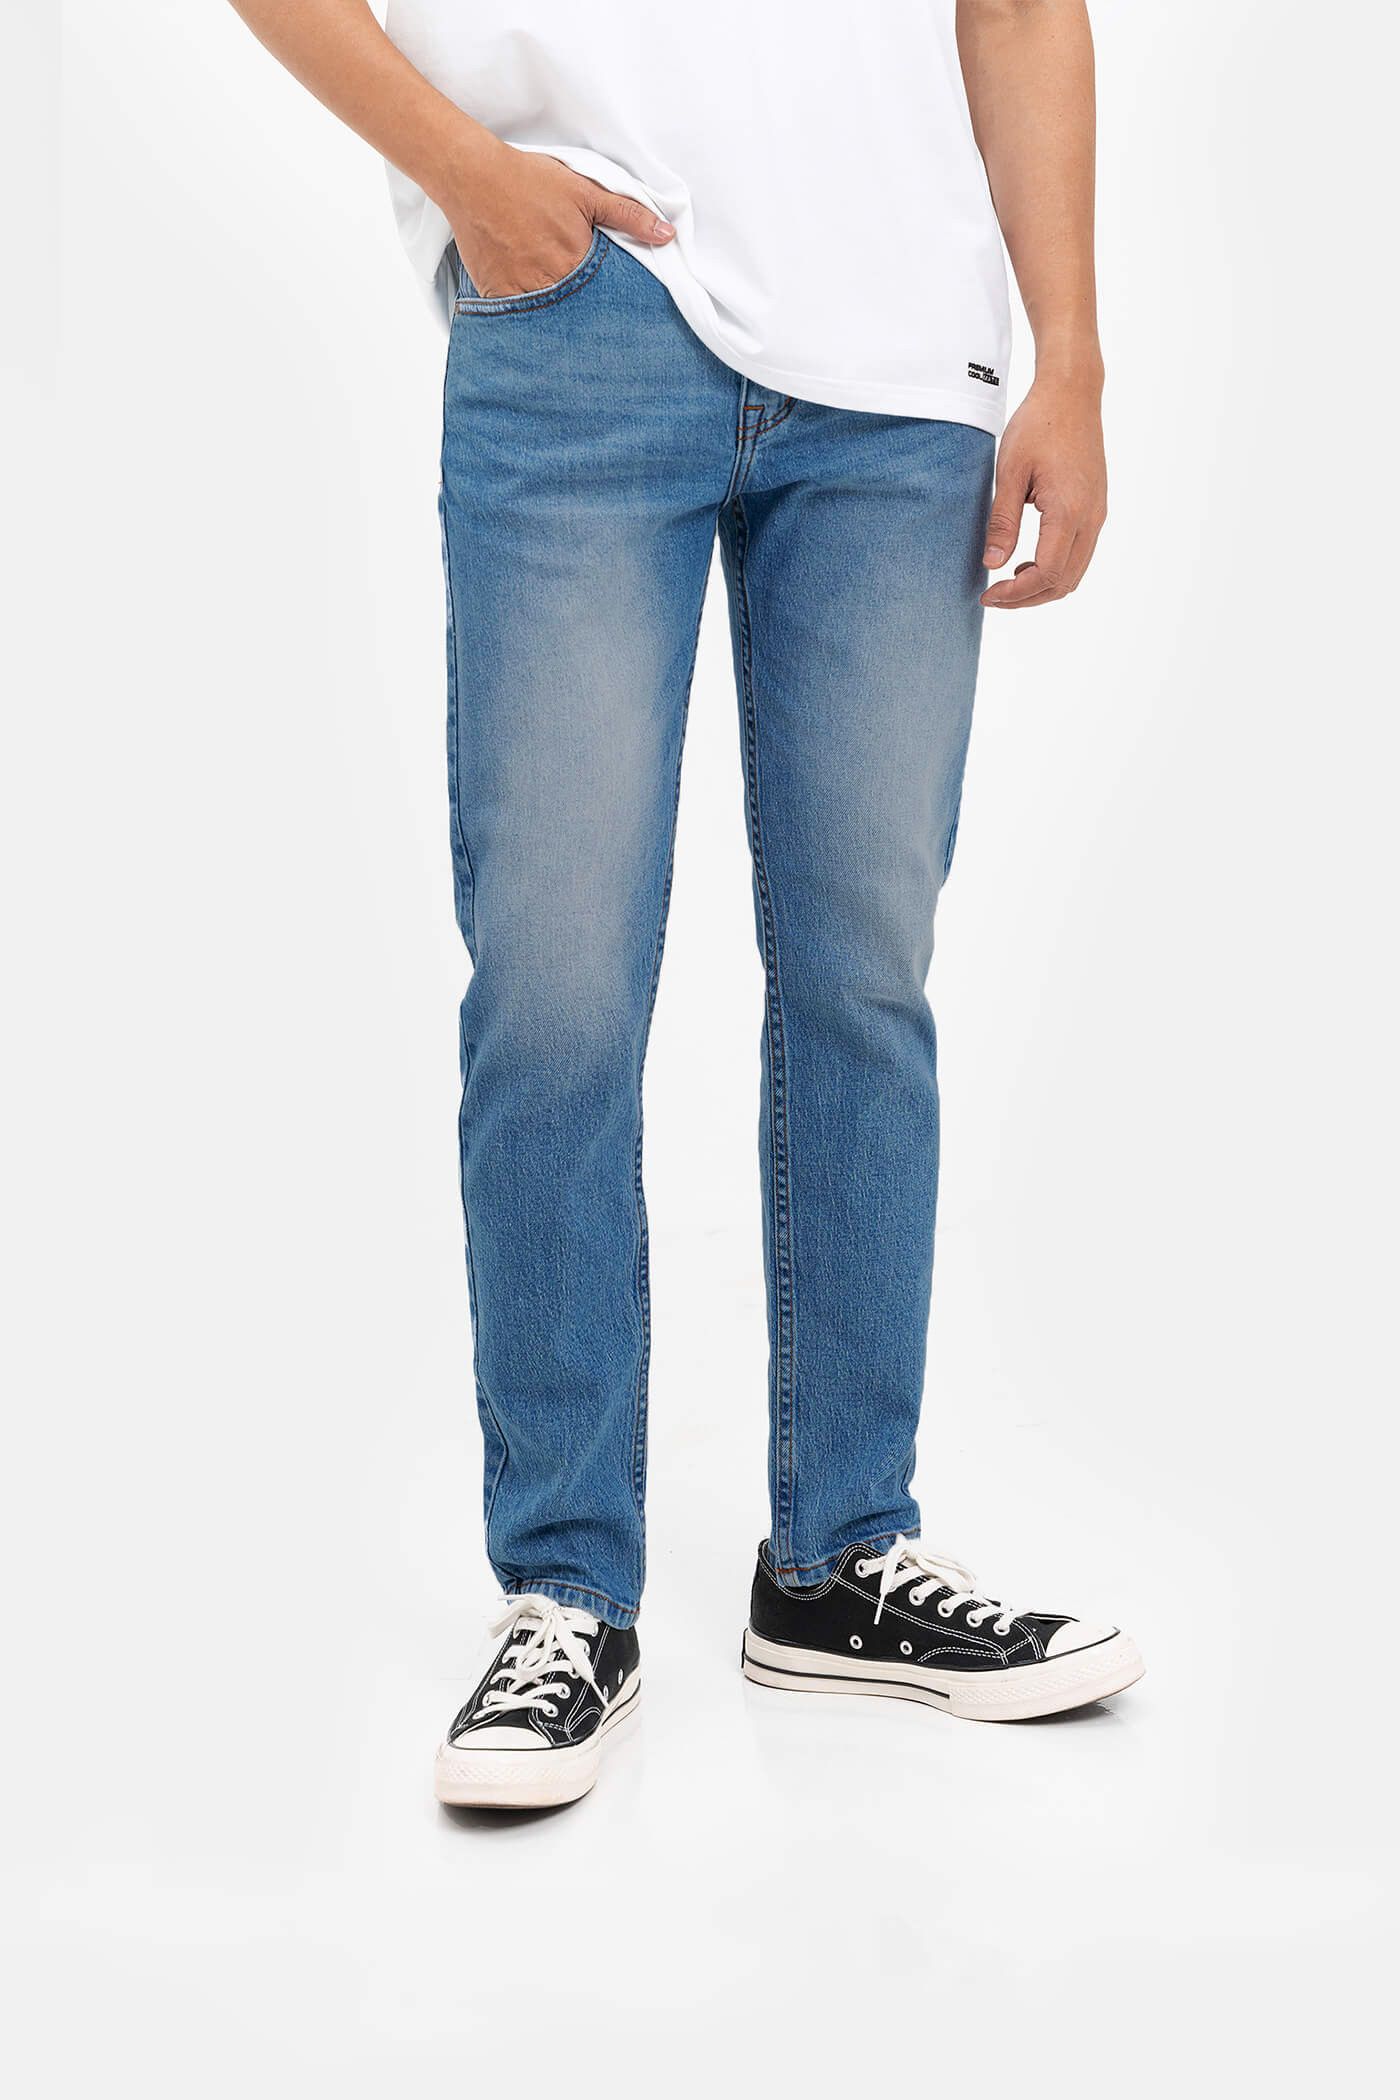 Today's Deal - Quần Jeans Clean Denim dáng Slimfit  S3 Xanh nhạt